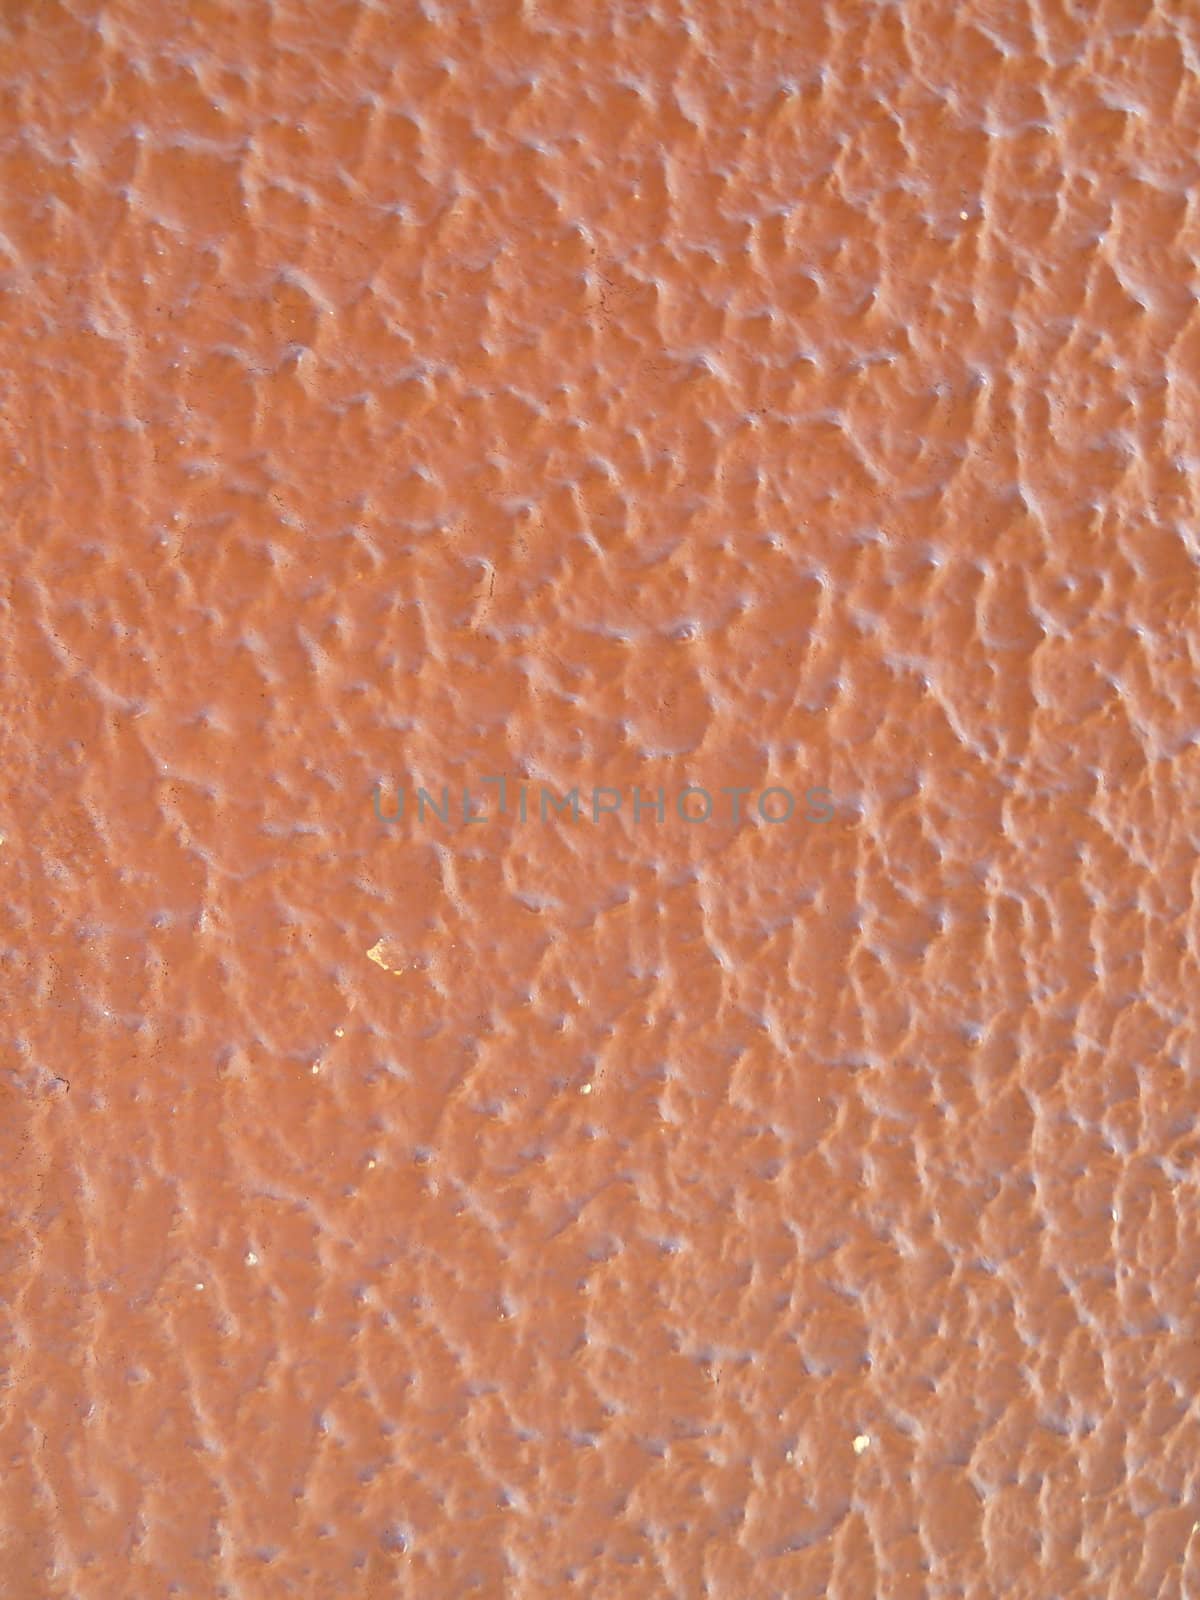 closeup of textured brown paint surface